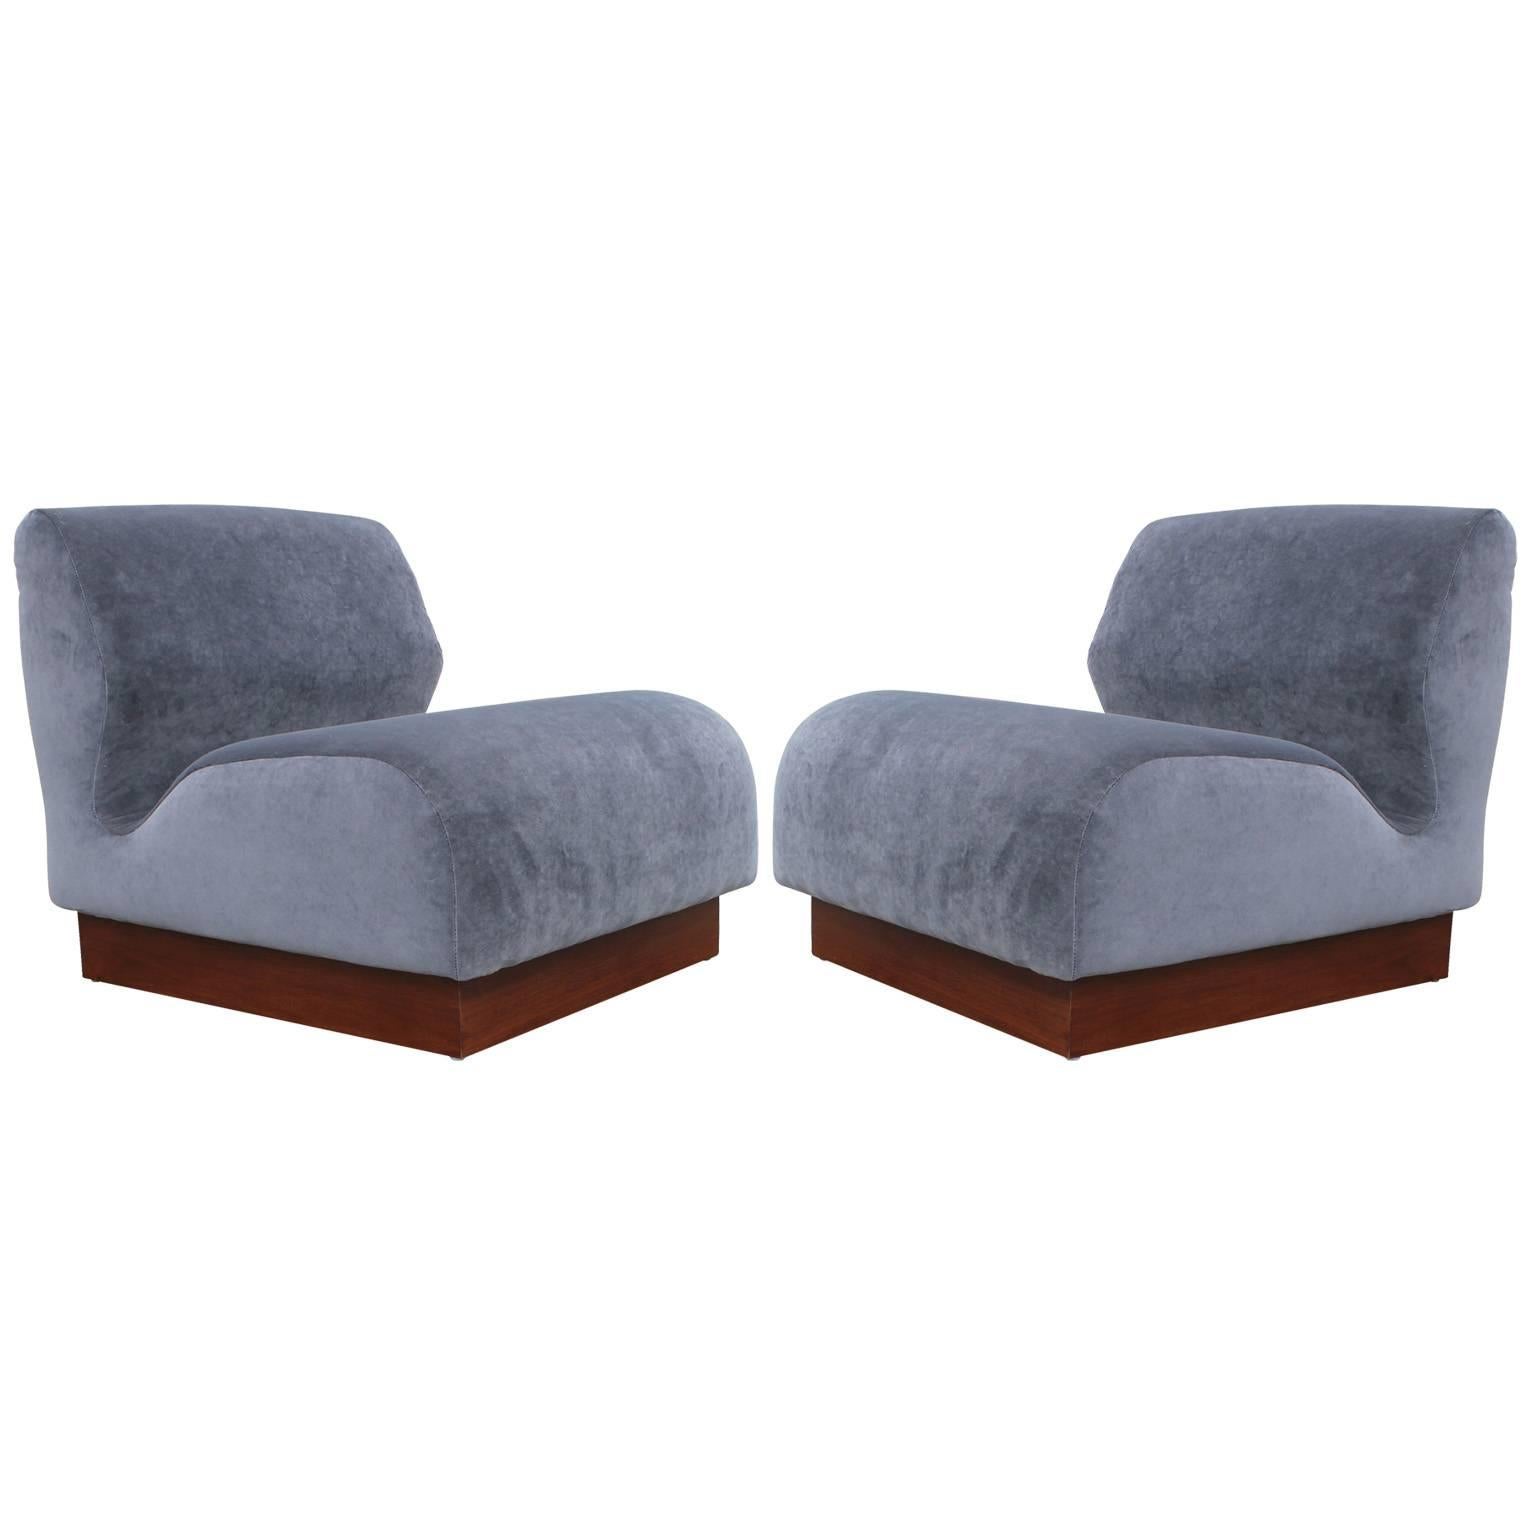 Organic Pair of Slipper Chairs in Grey Velvet